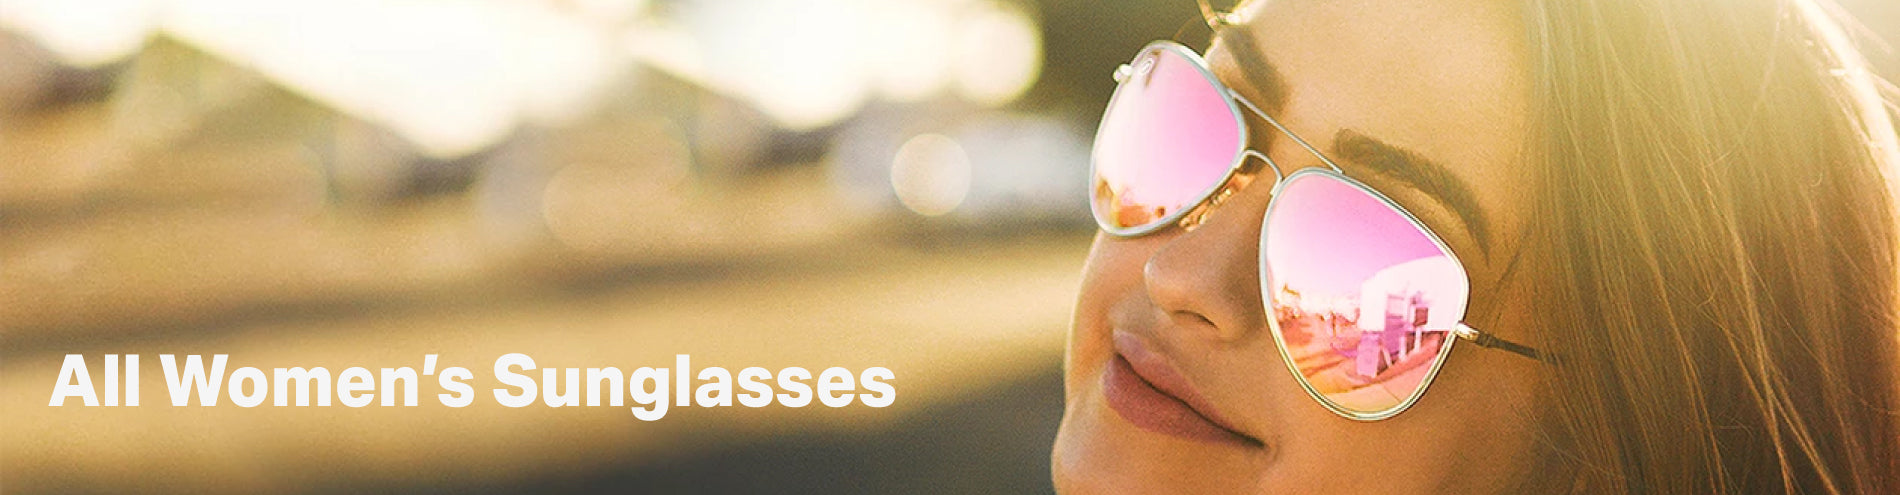 All Women's Sunglasses